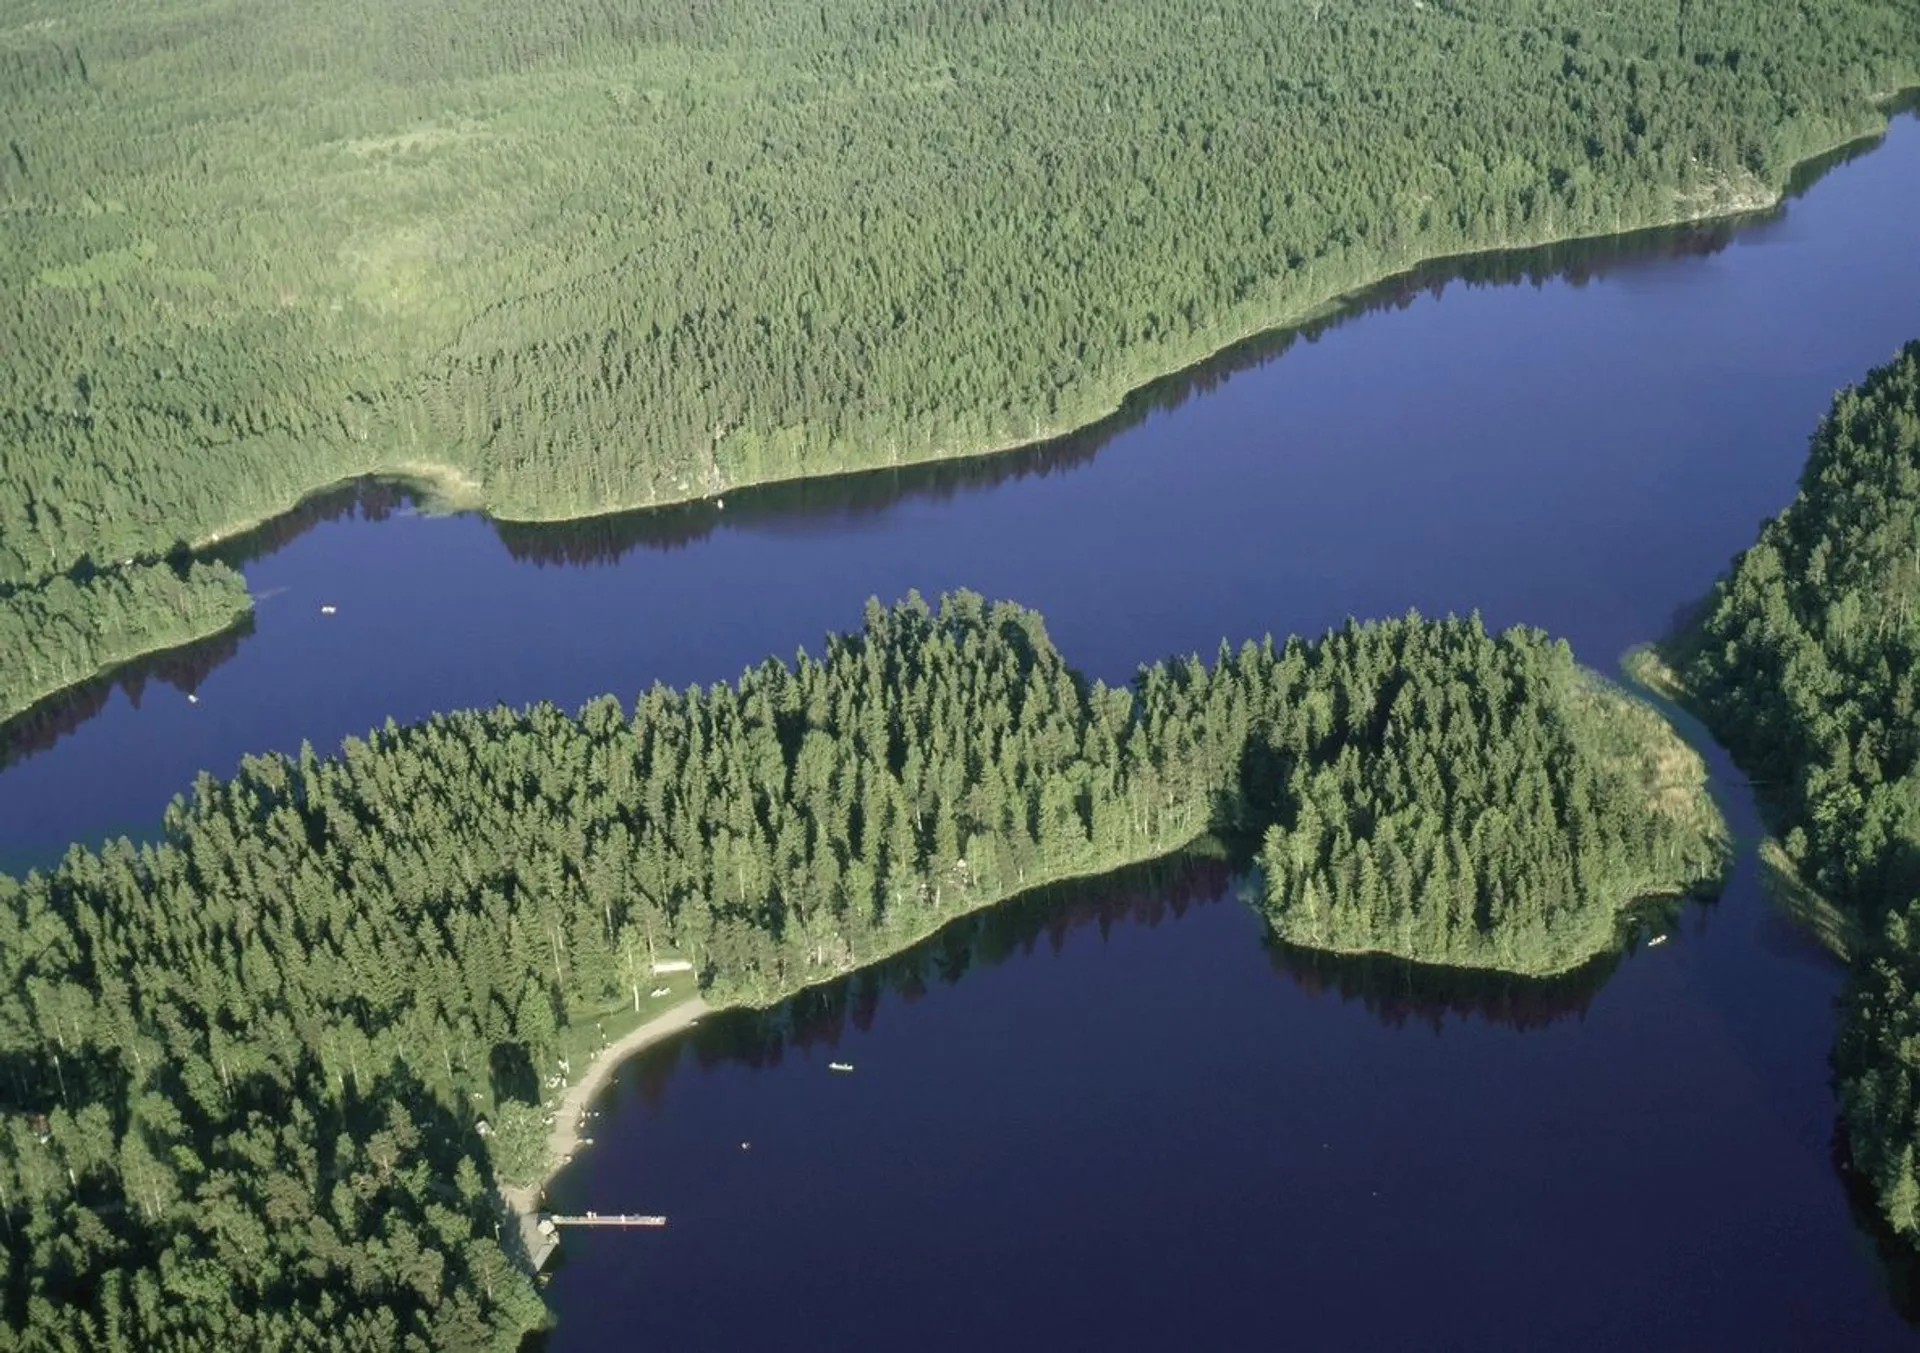 6 Sjöar - 6 lakes